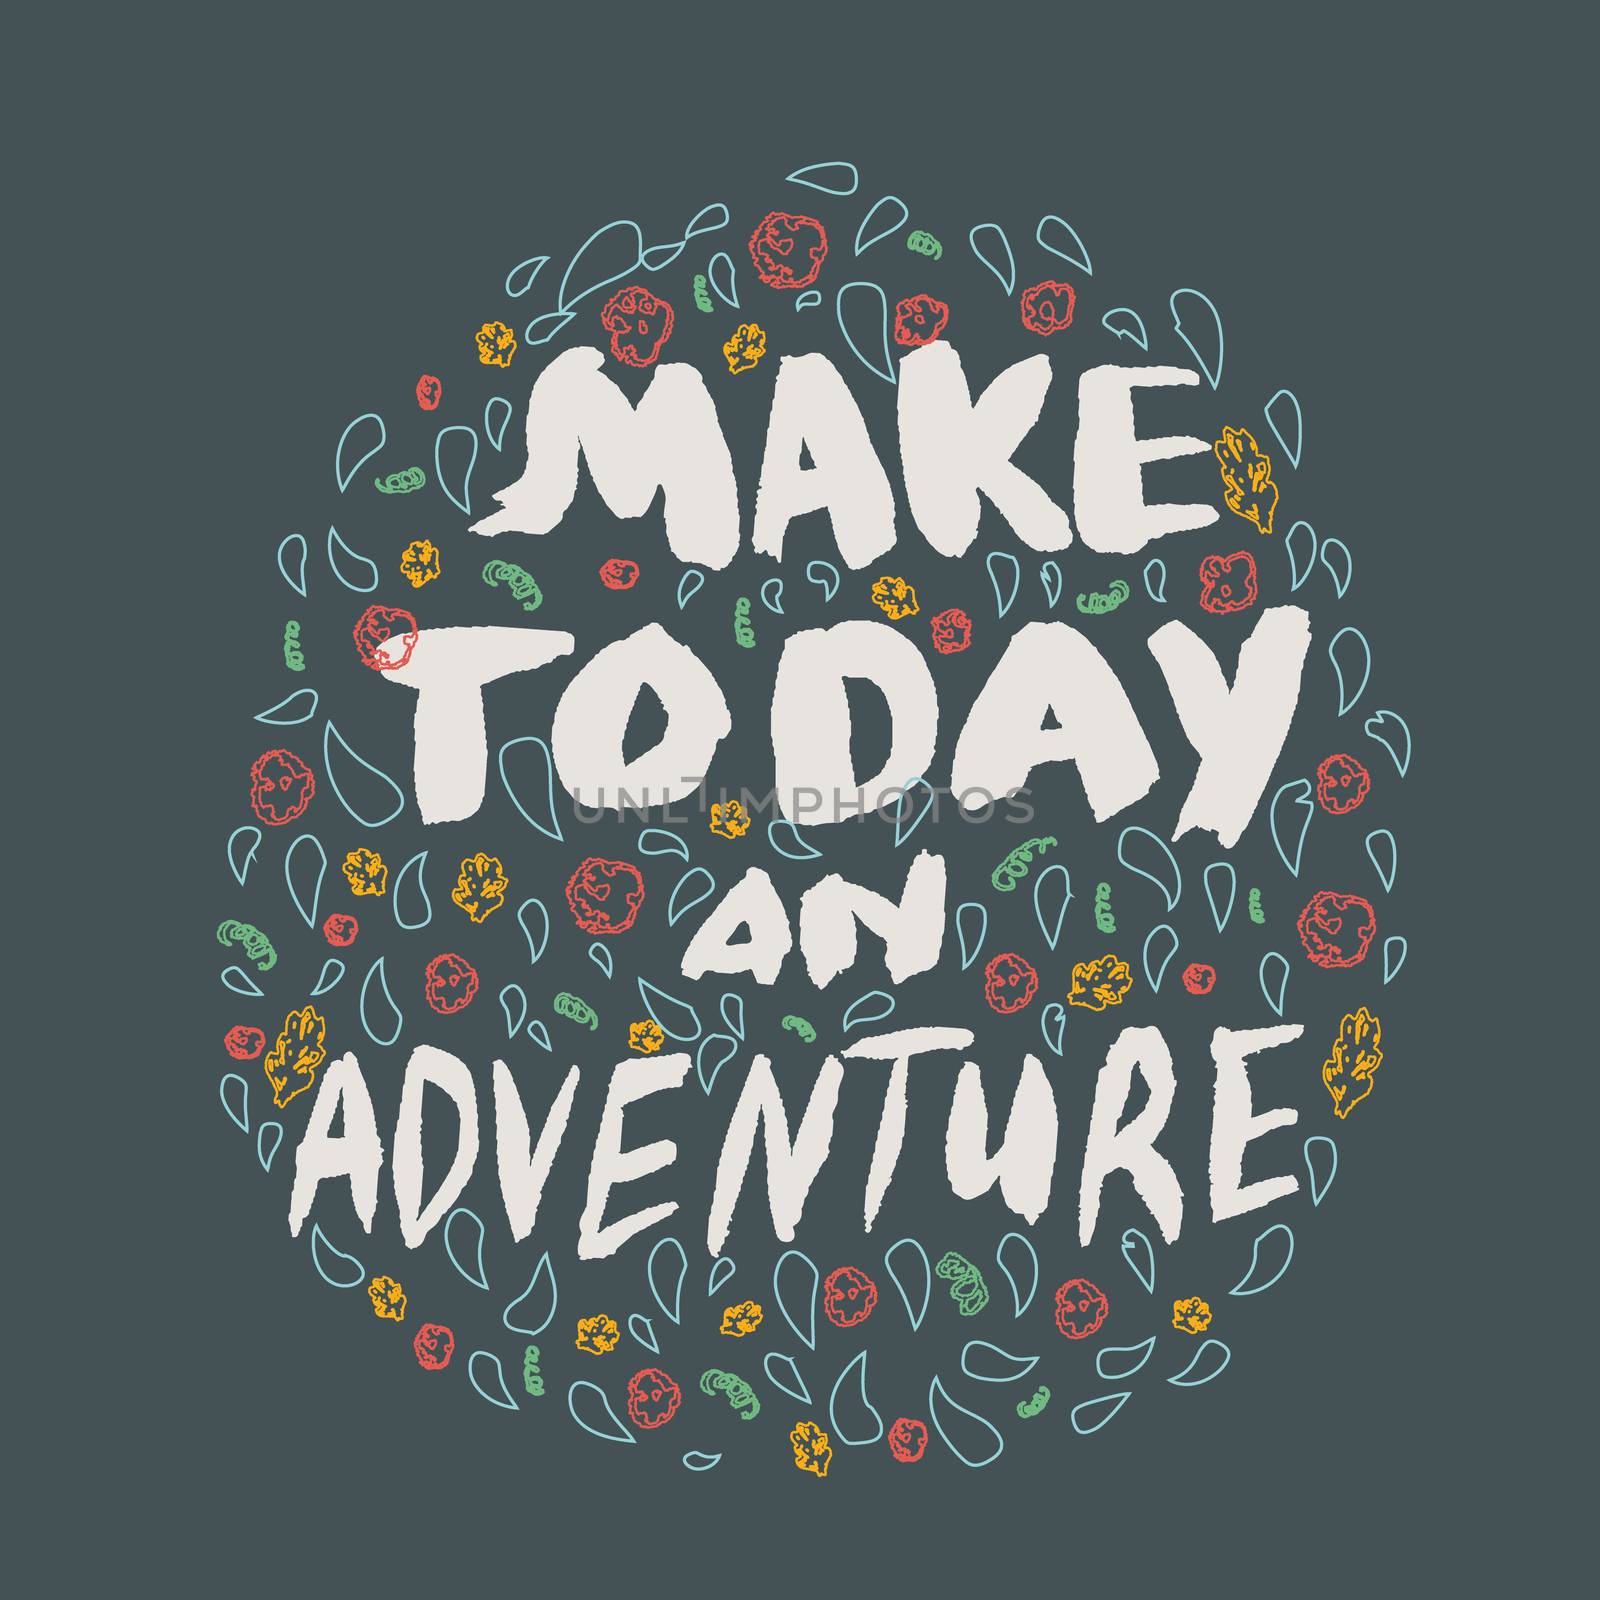 Travel the world, make everyday different. Make today an adventu by Nata_Prando